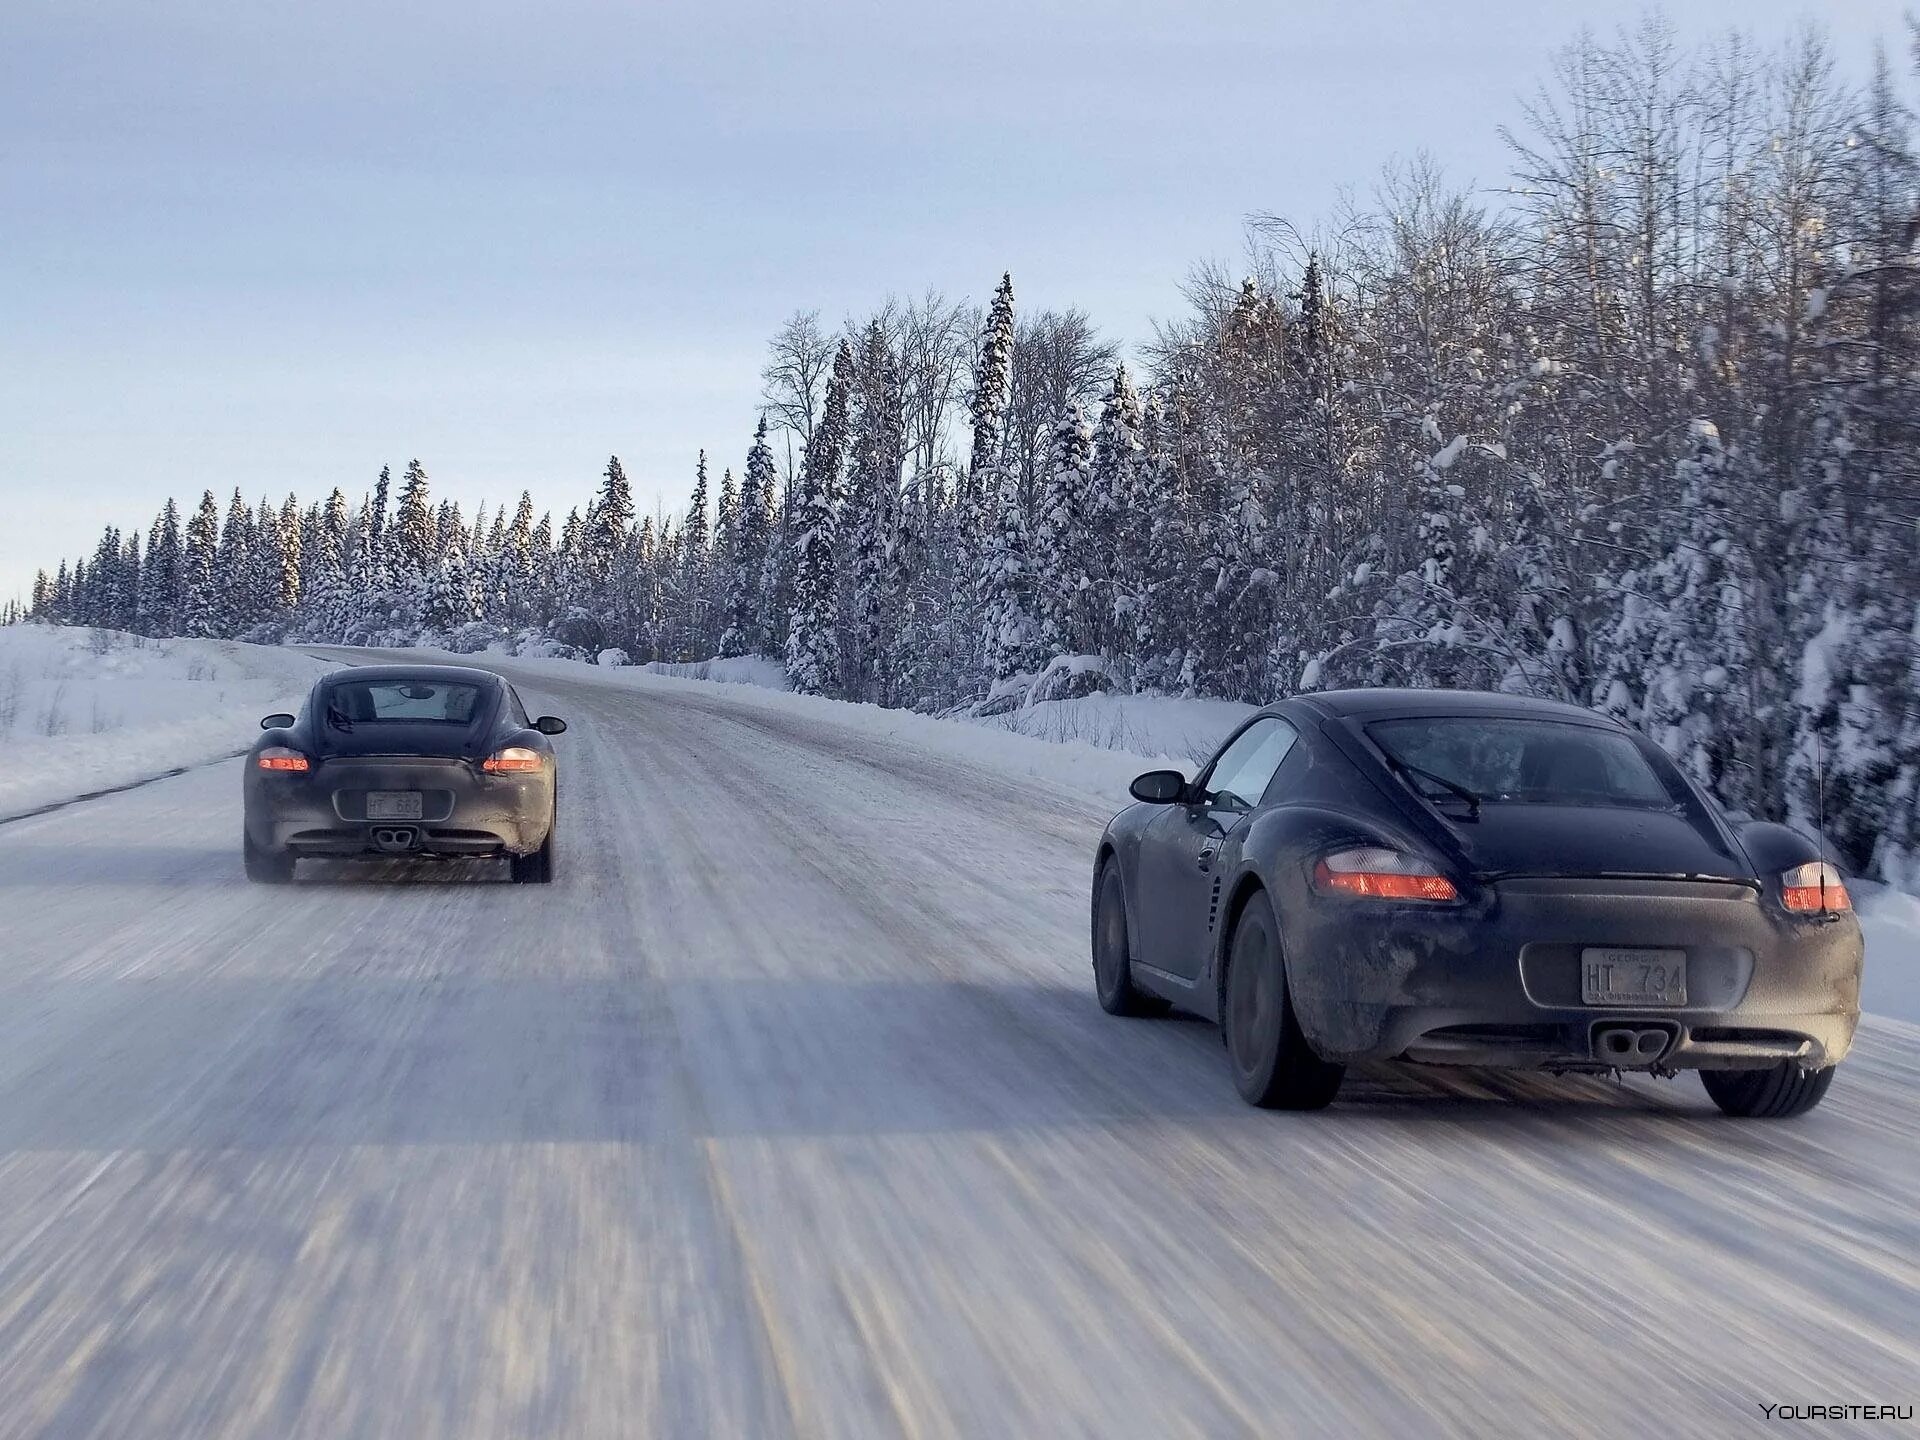 Машина зима. Автомобиль зимой. Машина на зимней дороге. Зимняя дорога.